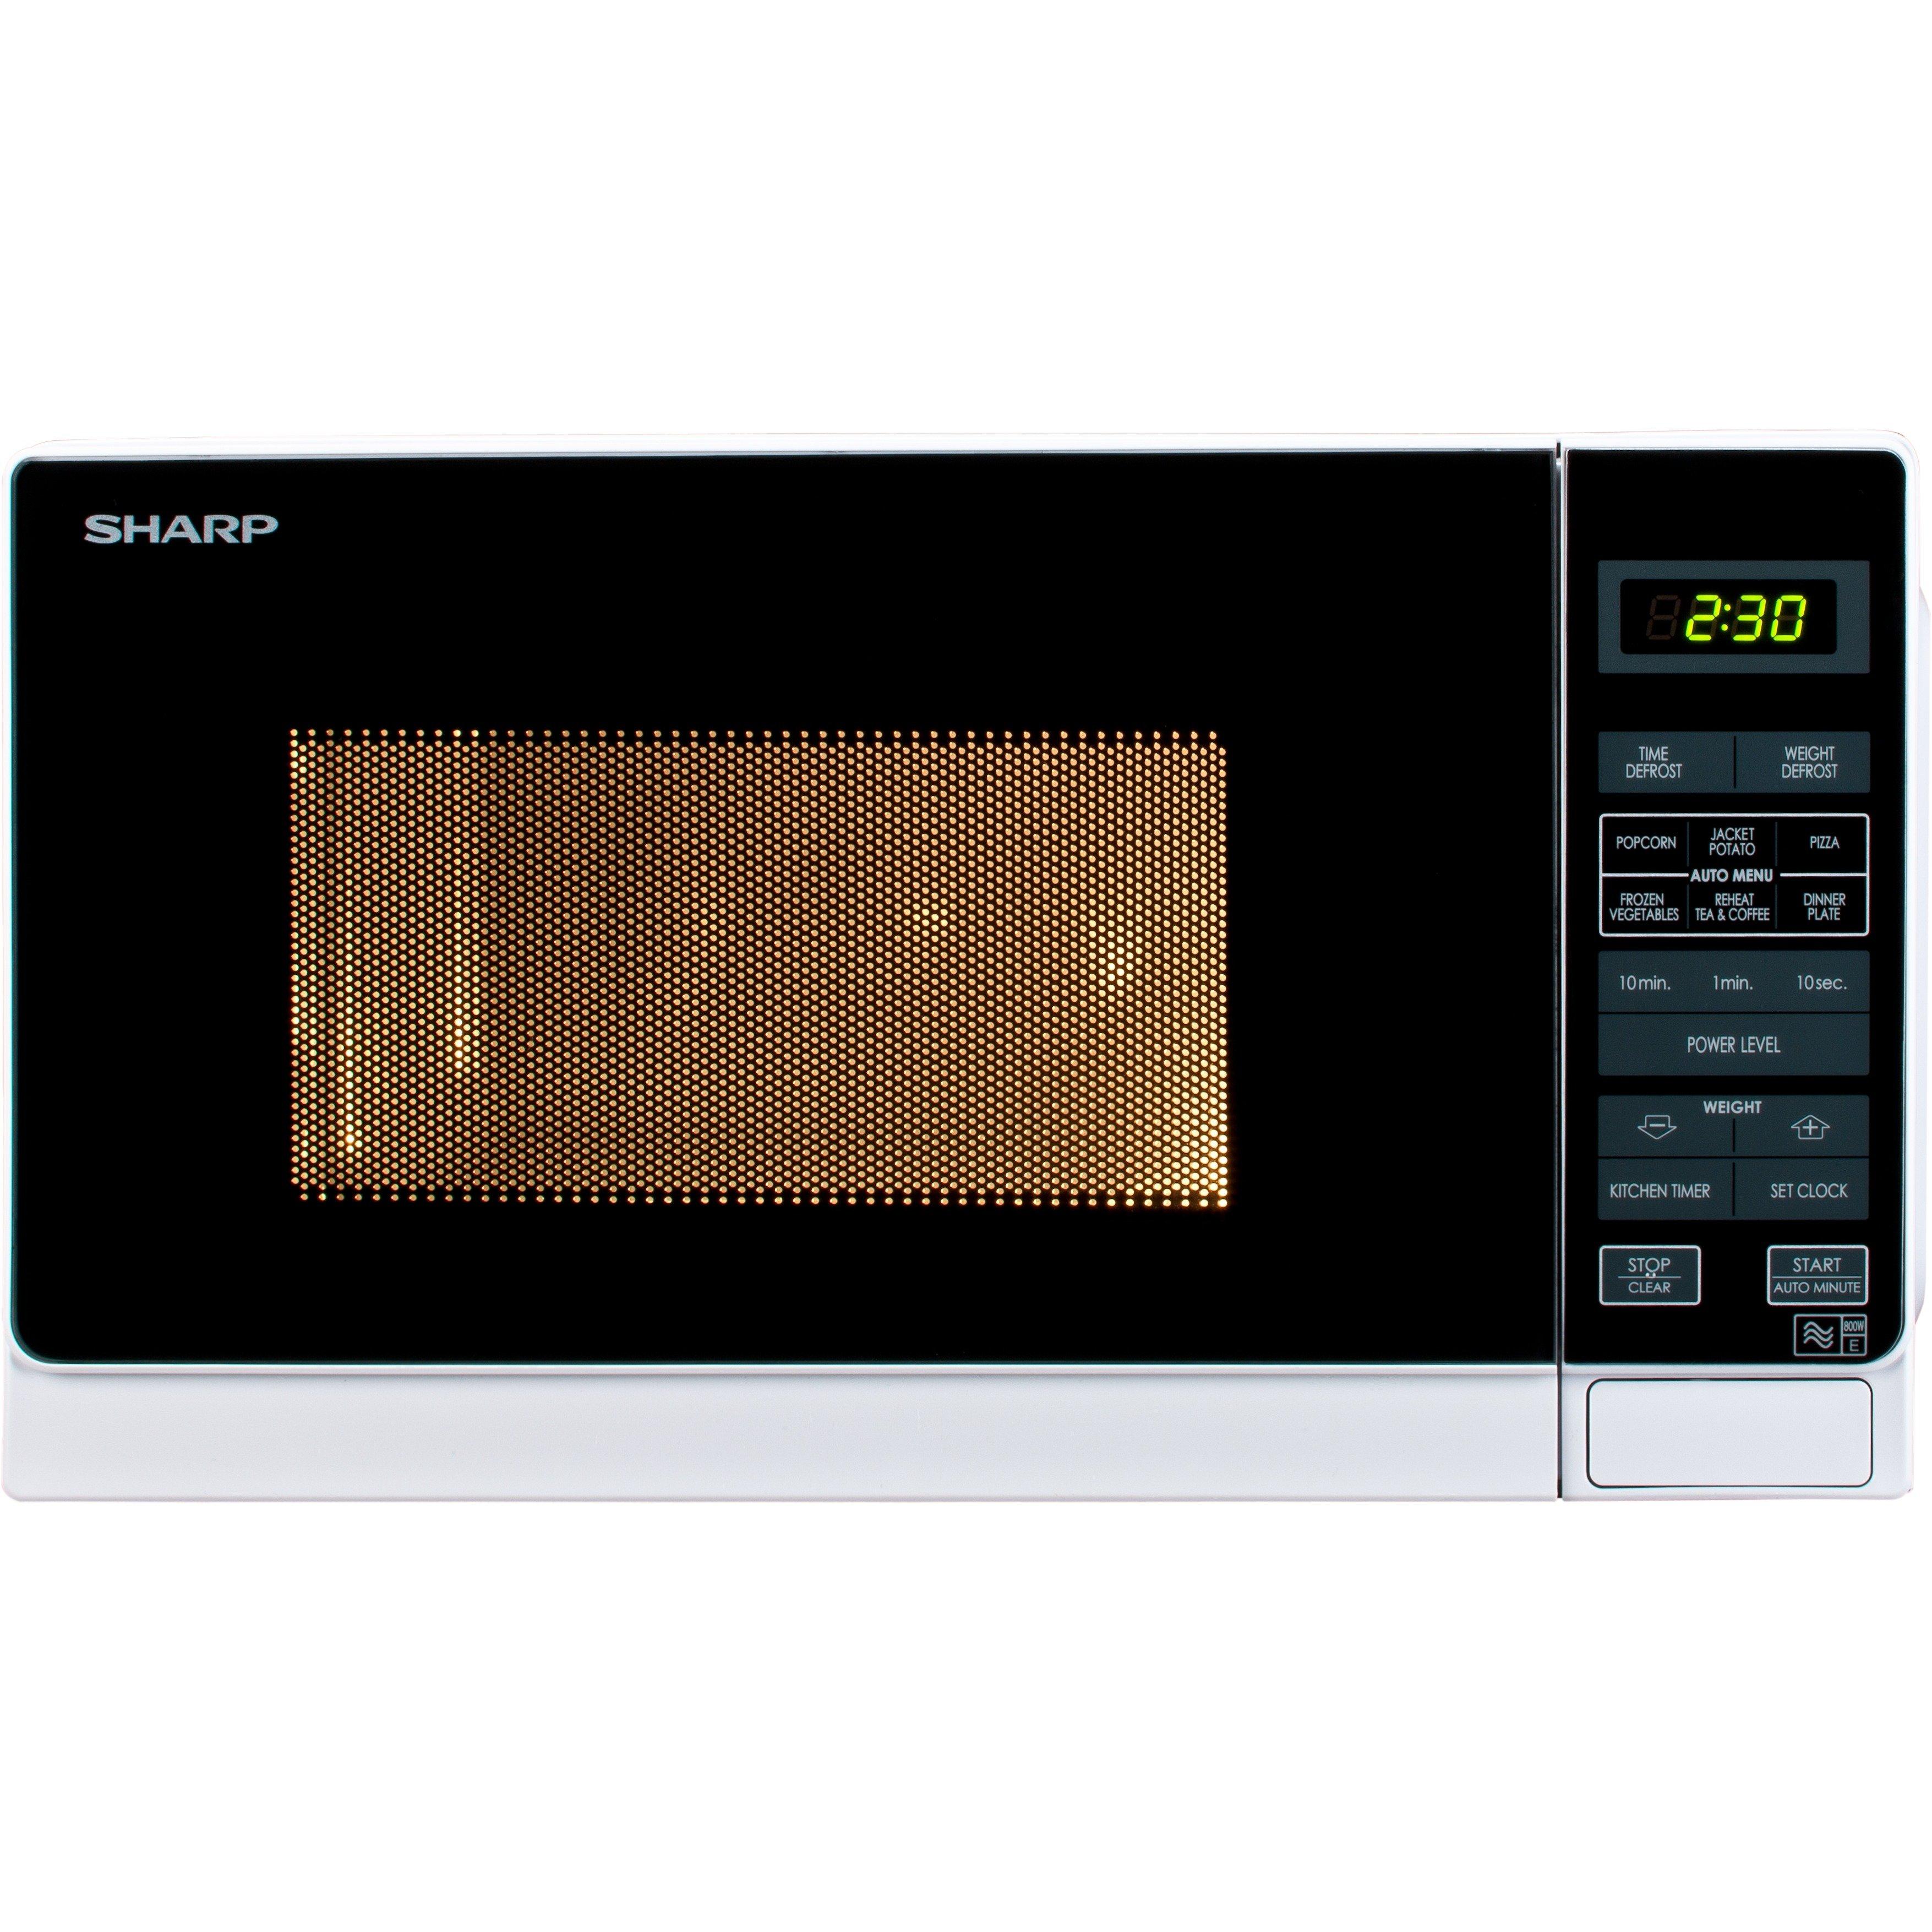 Microwaves | Small Appliances | Catalogue | Euronics Site